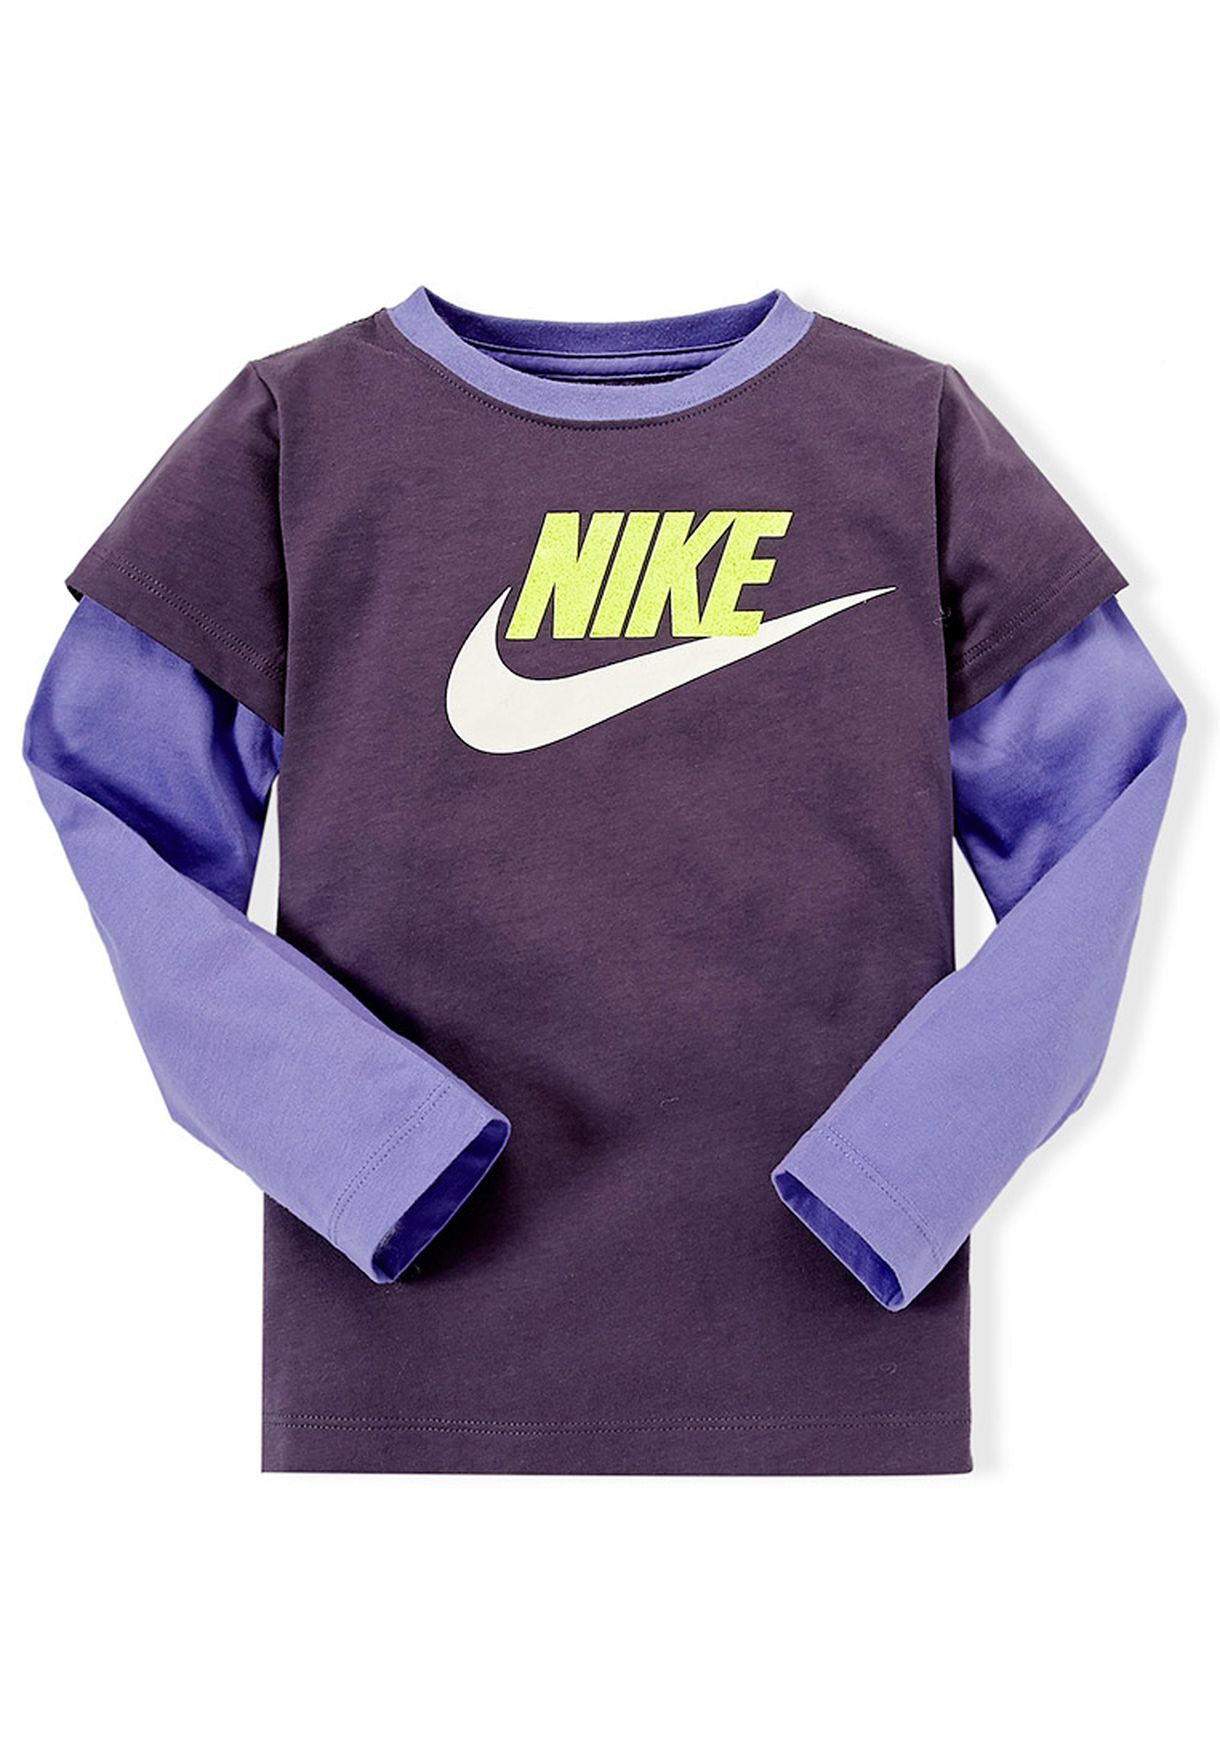 purple long sleeve nike shirts